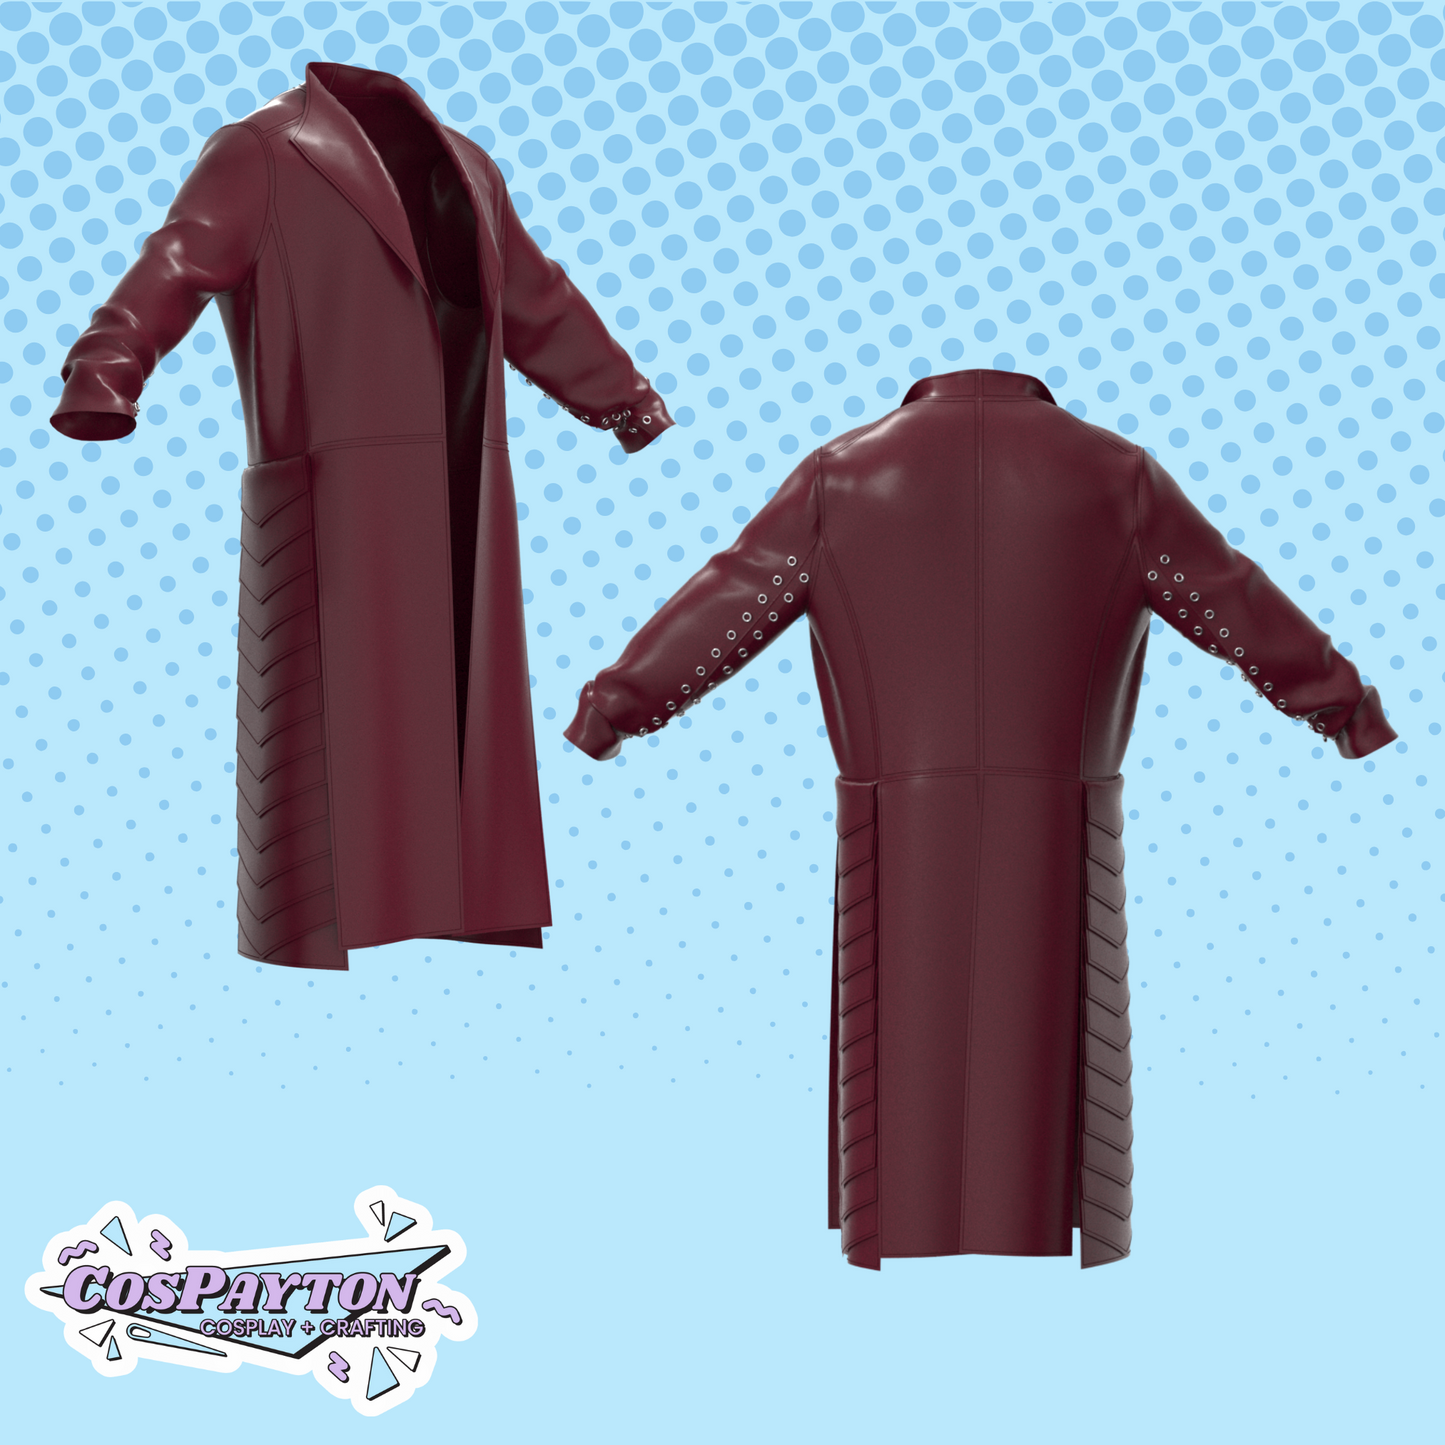 Jaskier Season 2 Jacket PDF Cosplay Pattern | The Witcher Inspired Printable Costume Pattern